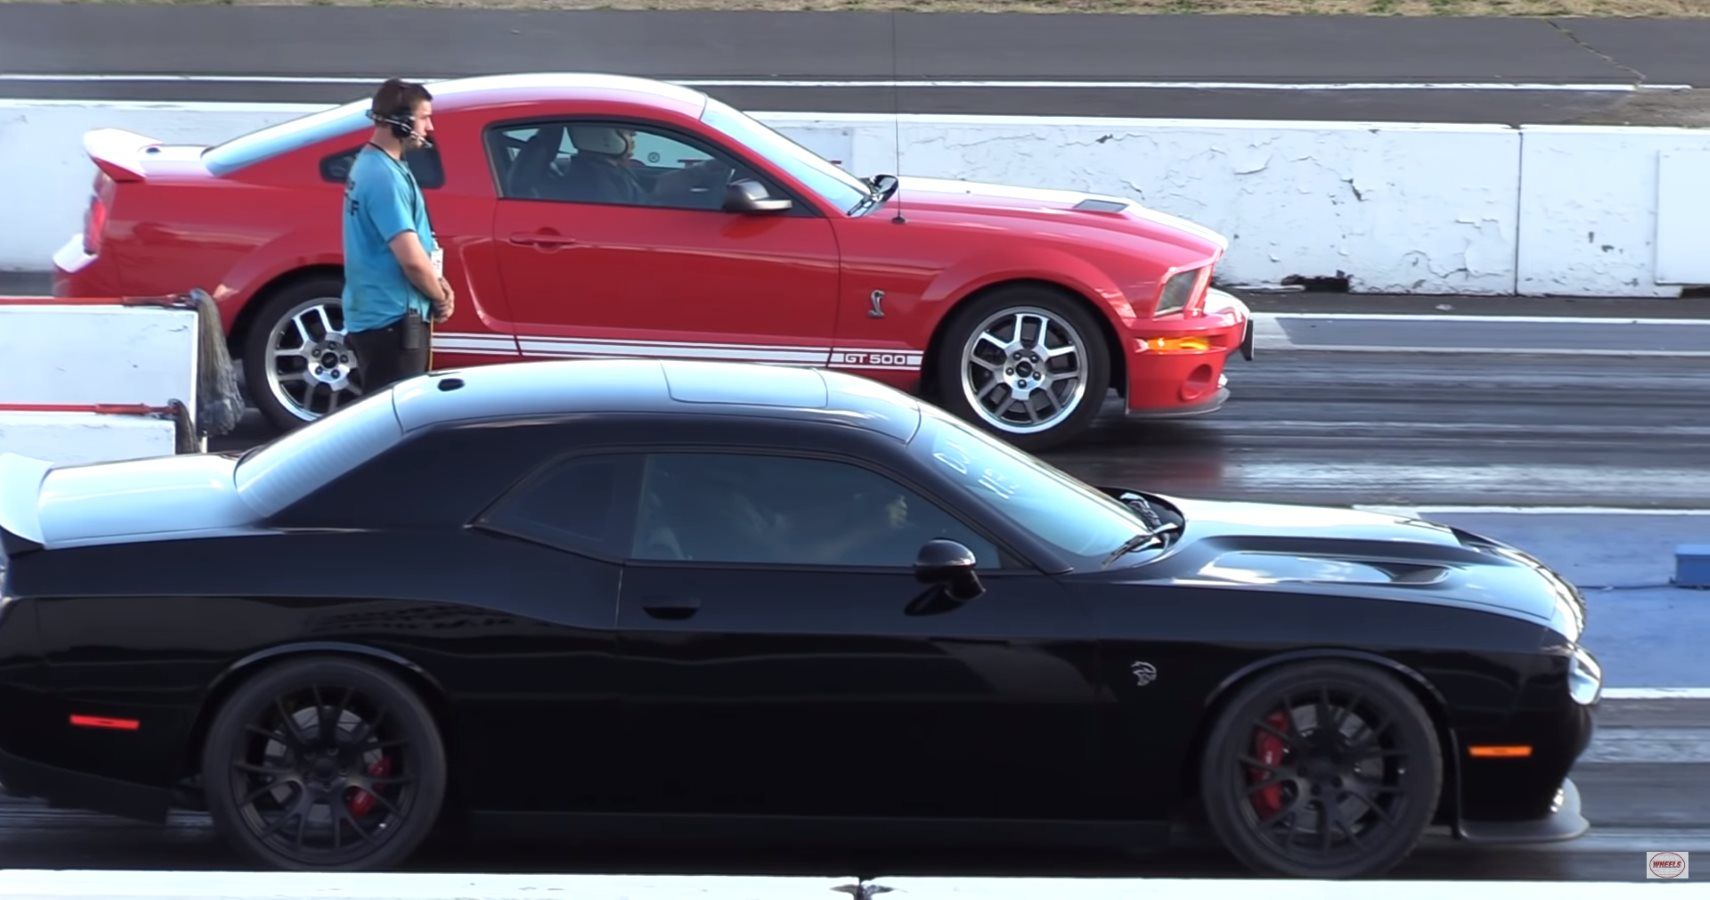 Watch A Mustang Shelby Embarrass A Hellcat Challenger In A Drag Race